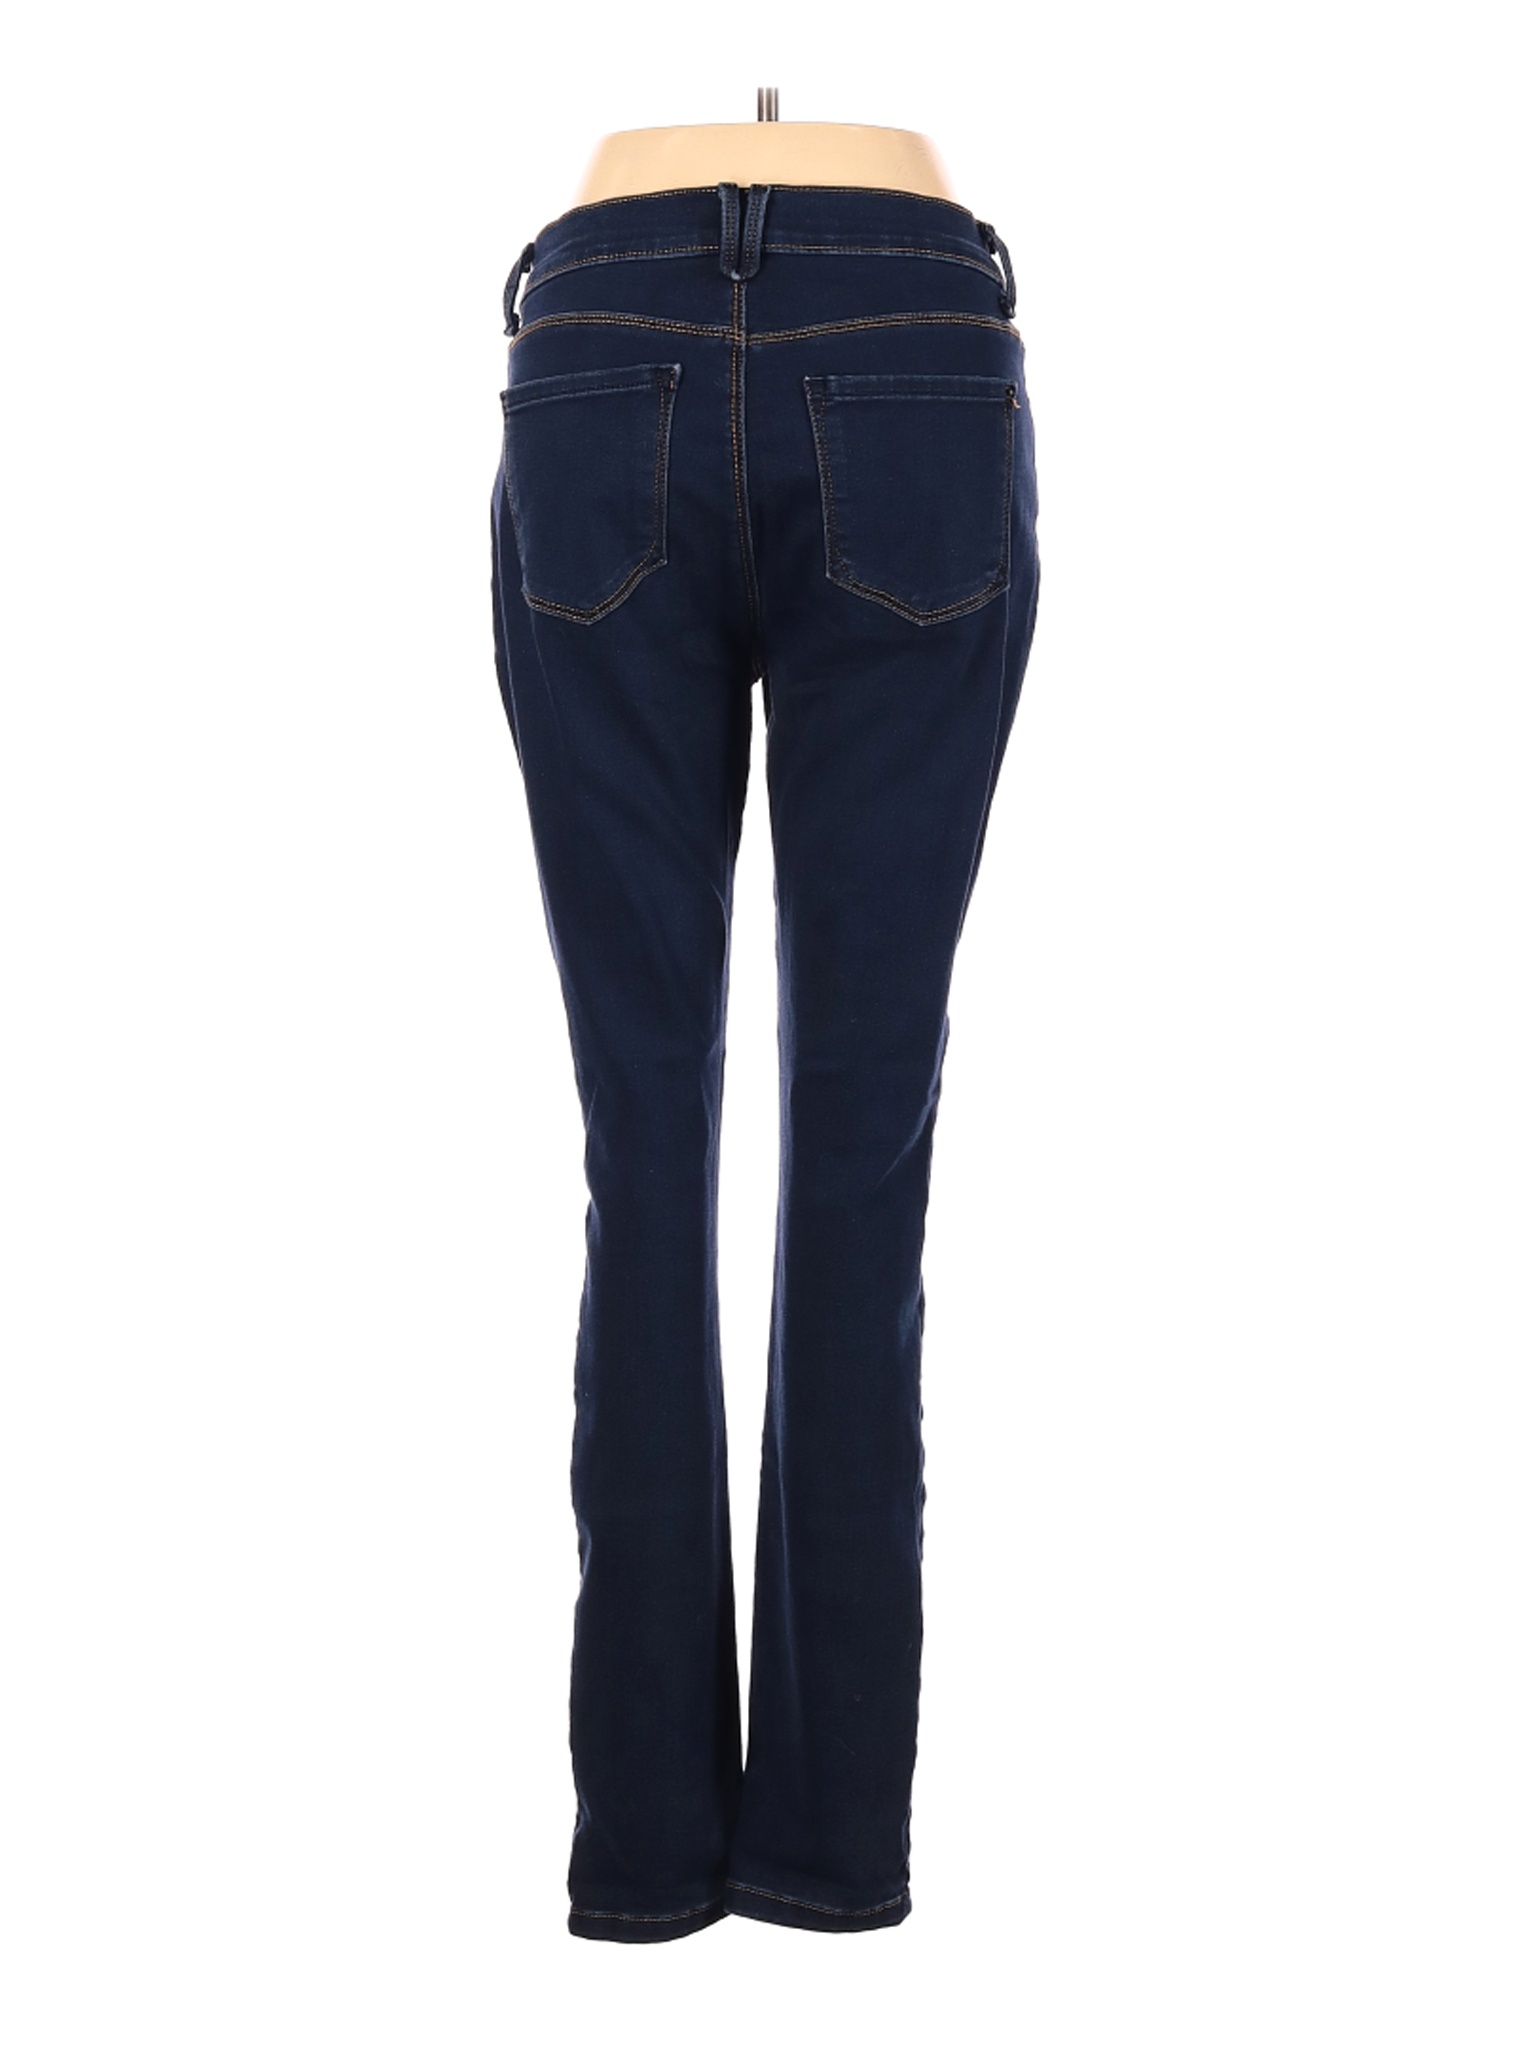 curve appeal jeans size 12